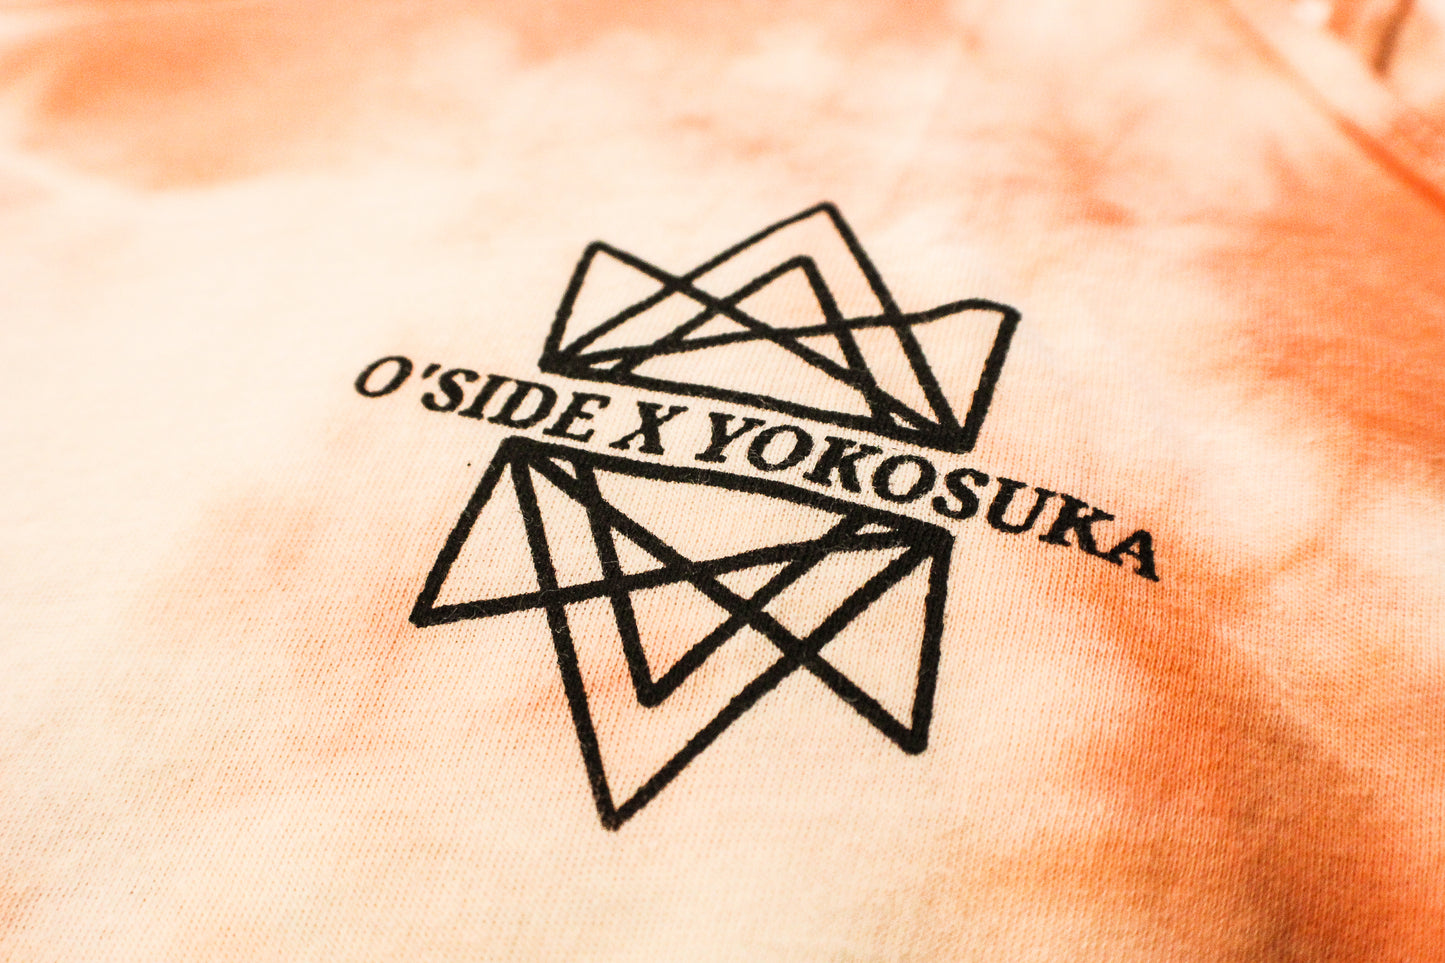 Limited O'side x Yokosuka Shibori Dyed Women's Tank top - Large